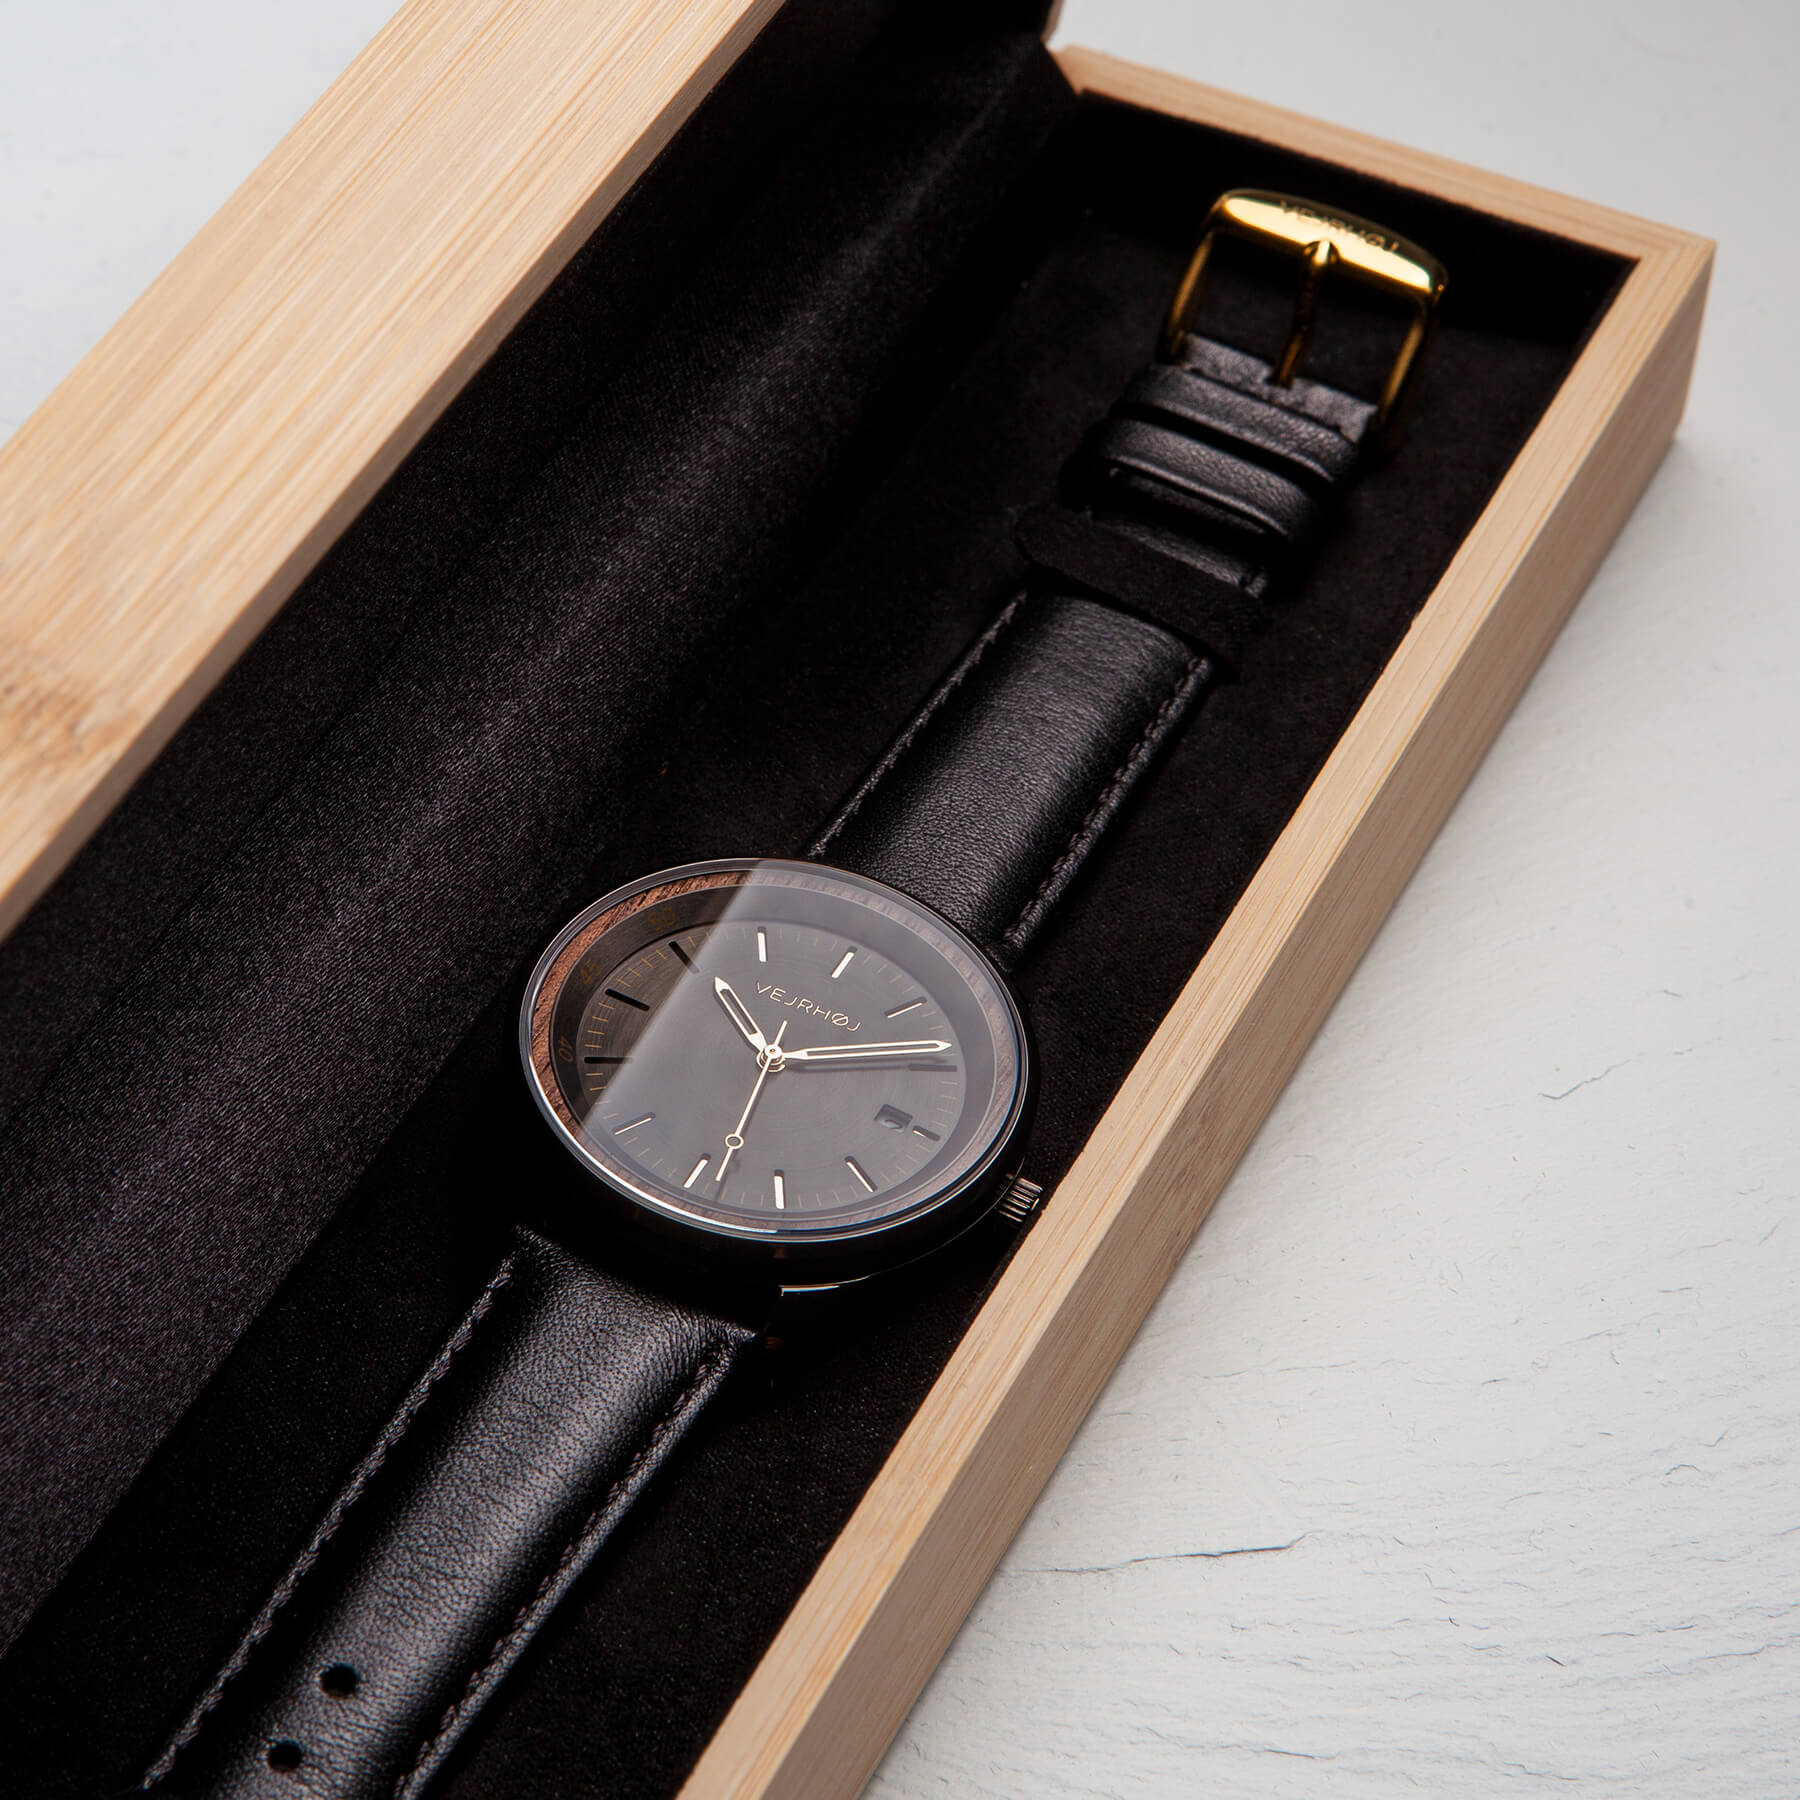 Black automatic watch inside a bamboo box